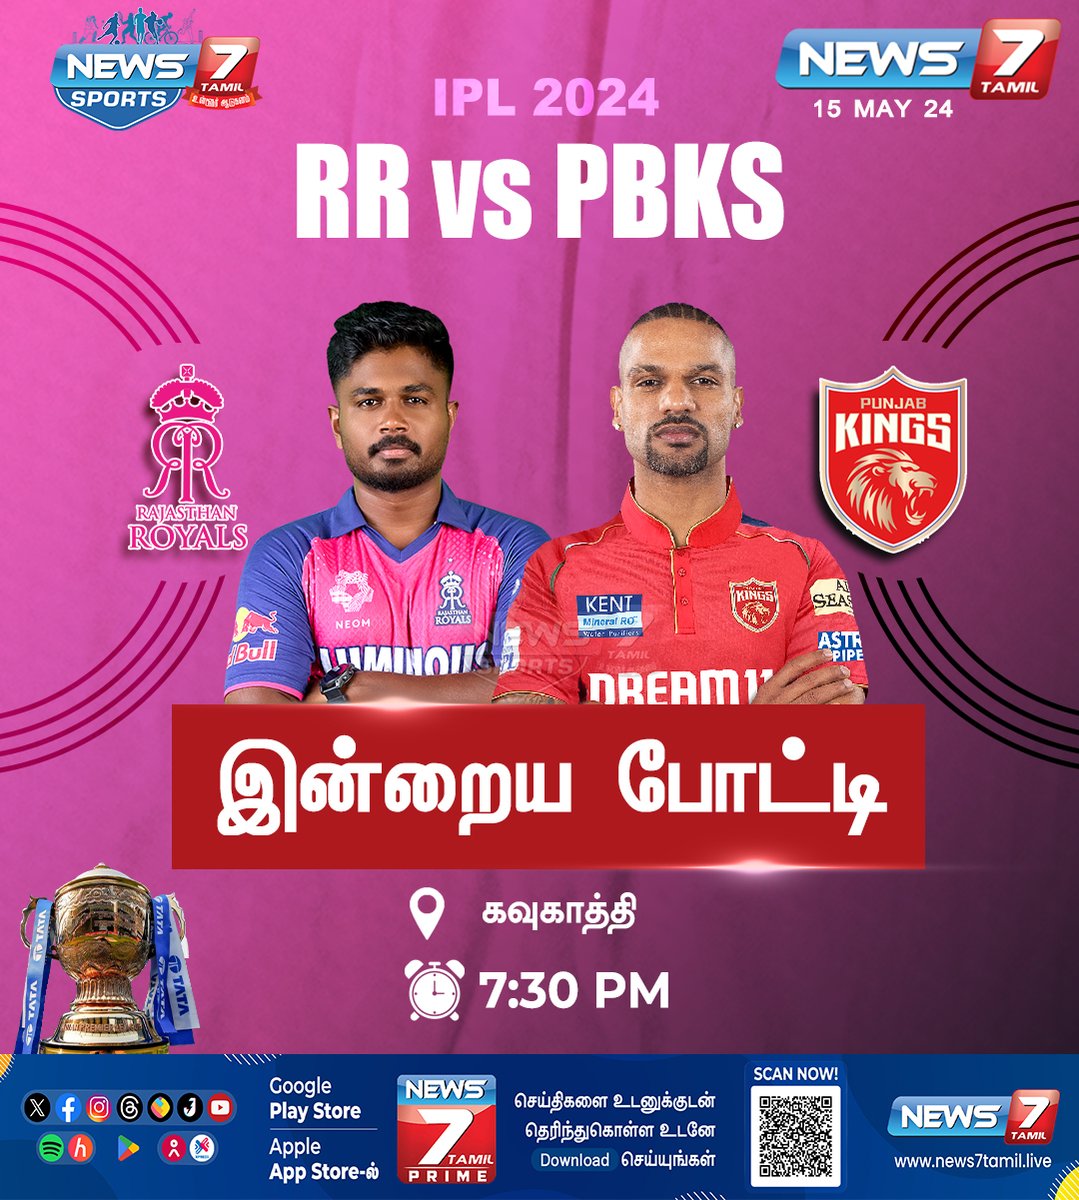 RR vs PBKS news7tamil.live | #RRVsPBKS | #PBKSvsRR | #PunjabKings | #RajasthanRoyals | #IPLCricket2024 | #Sanjusamson | #Cricket | #News7Tamil | #News7TamilUpdates | #News7TamilSports